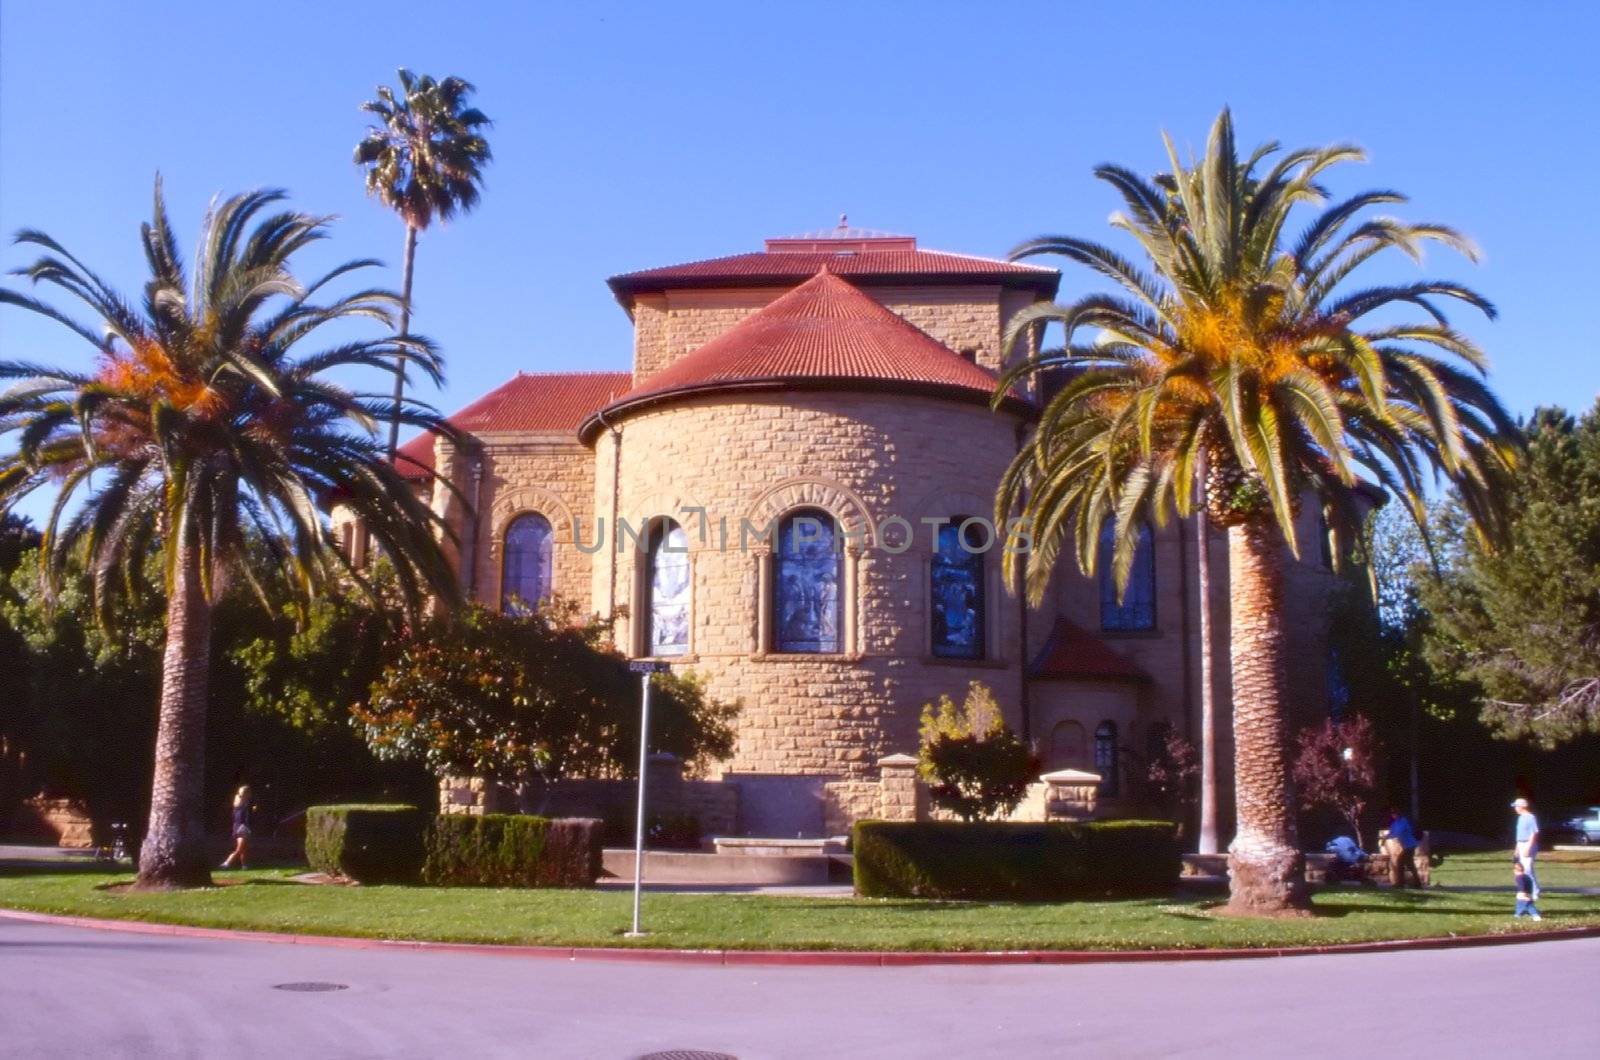 Stanford Memorial Church by melastmohican